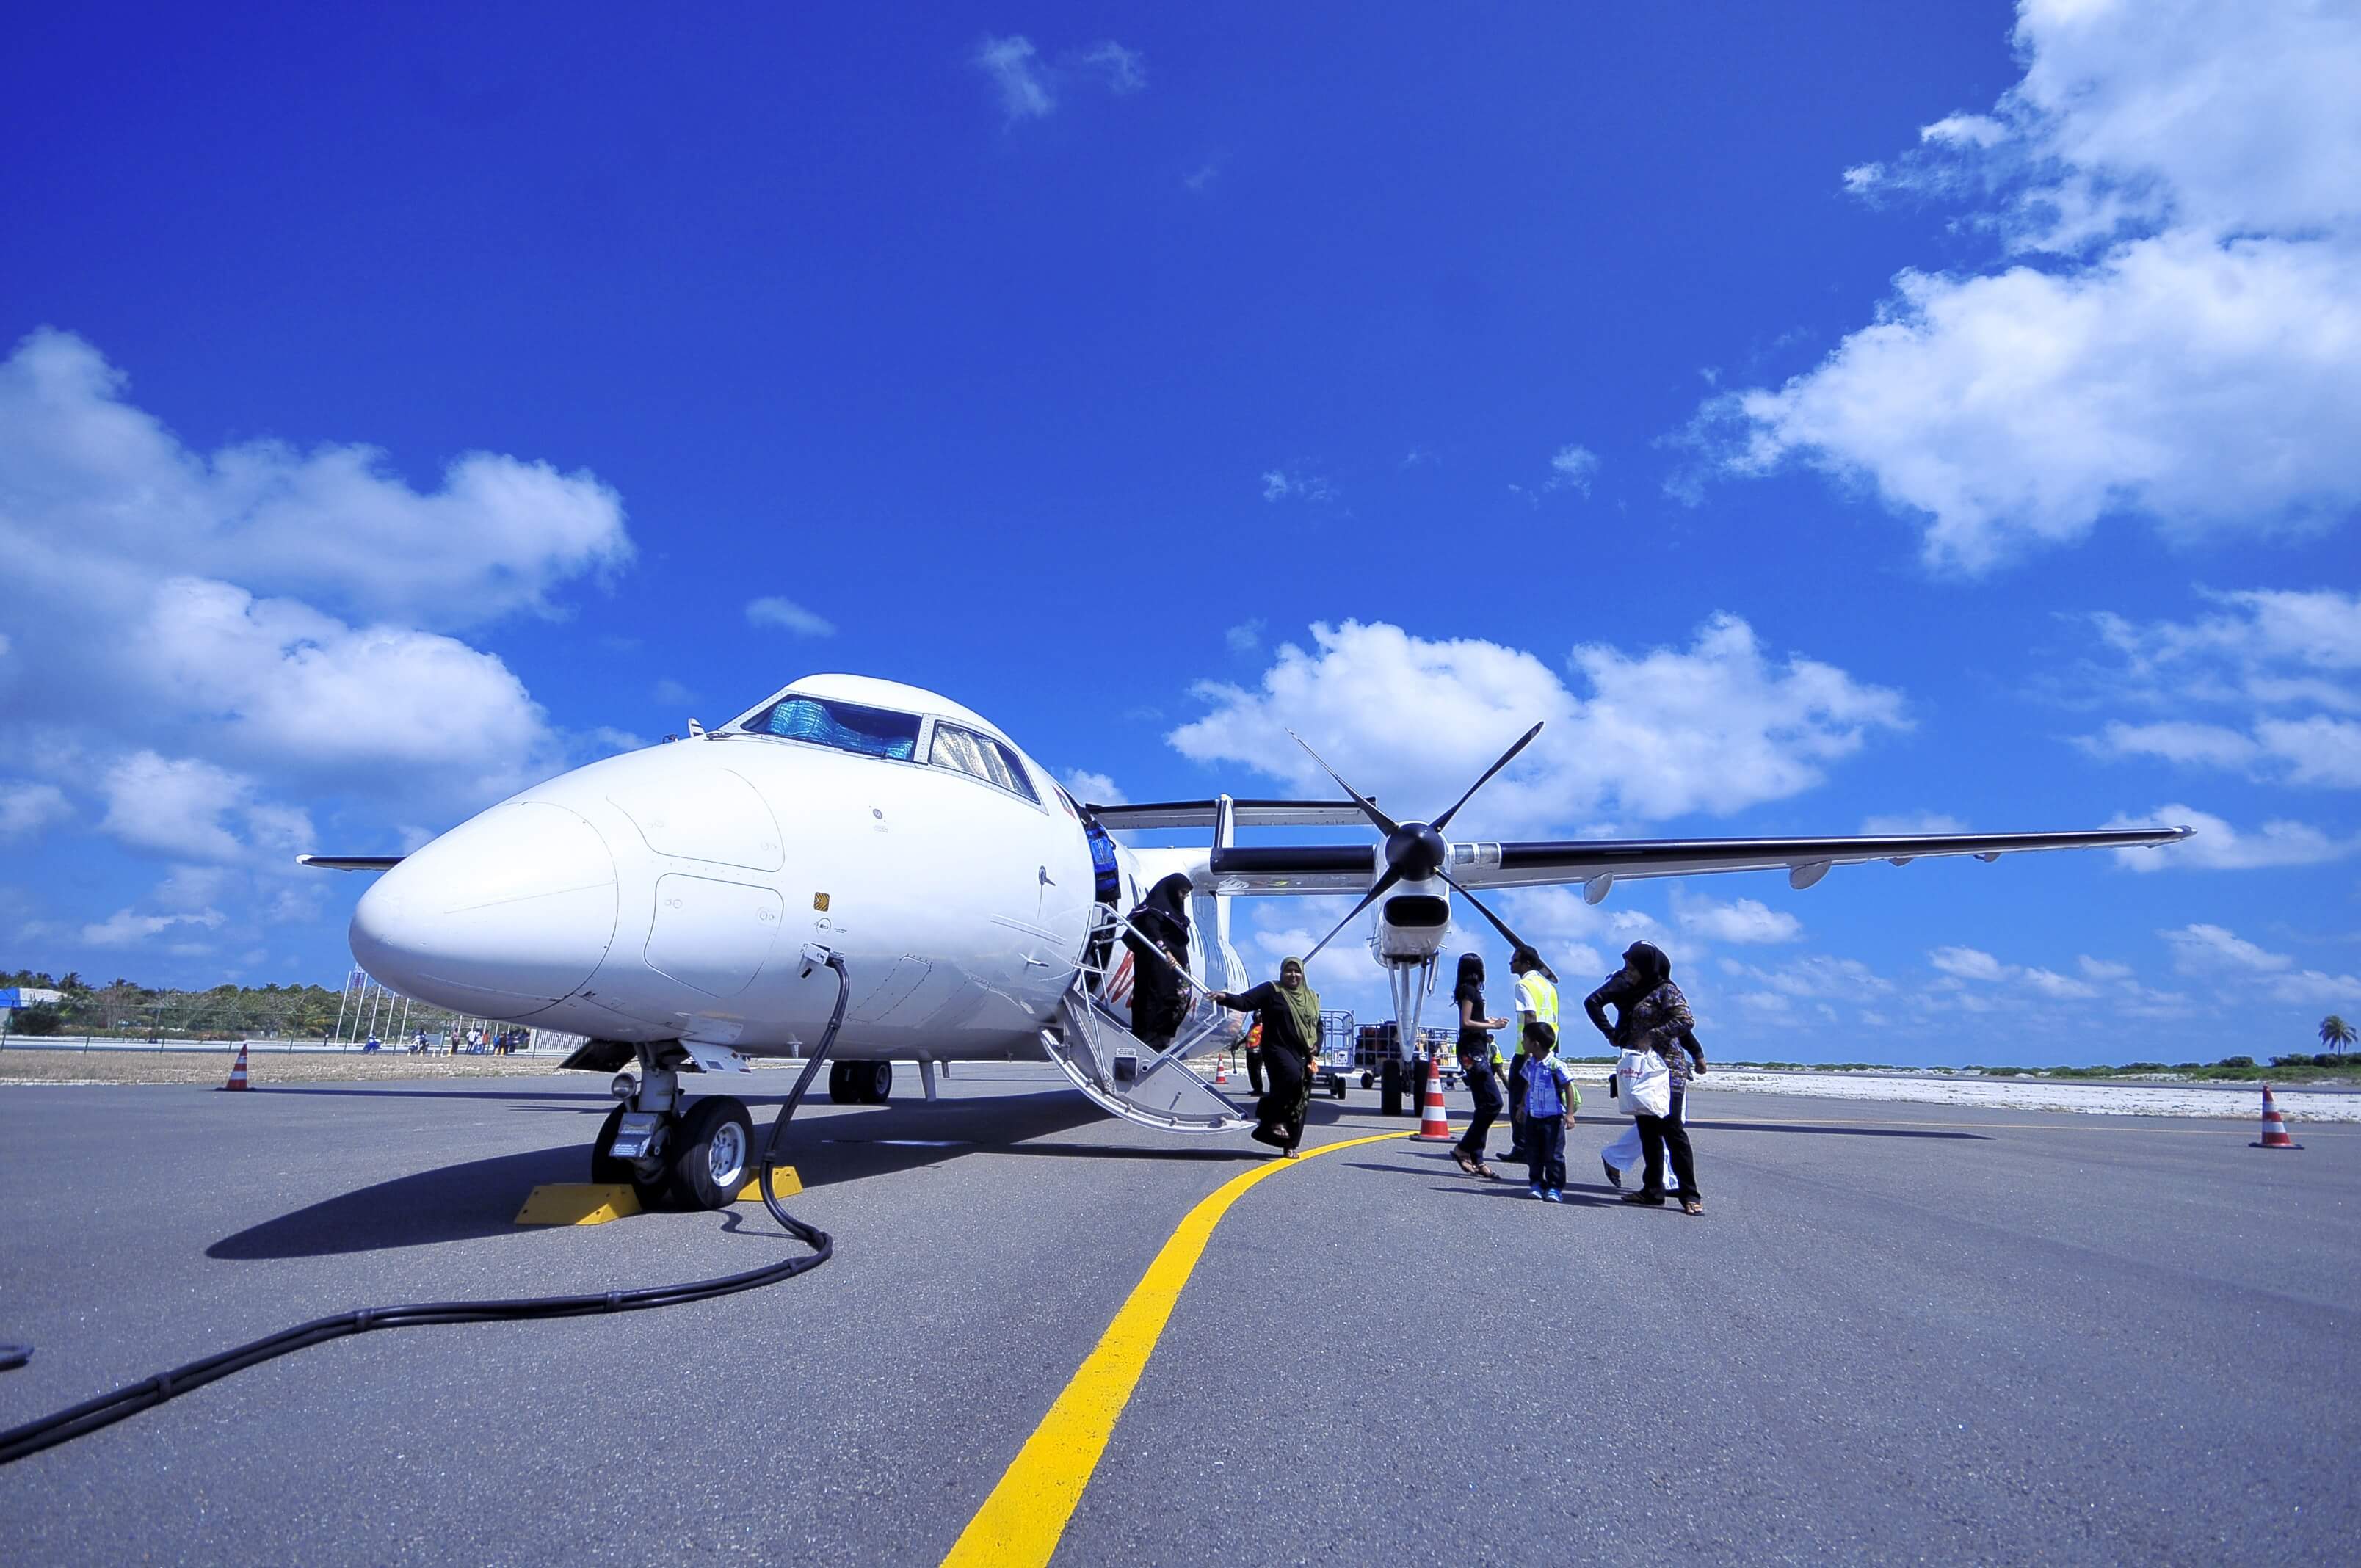 Departure flight to Entebbe International Airport.